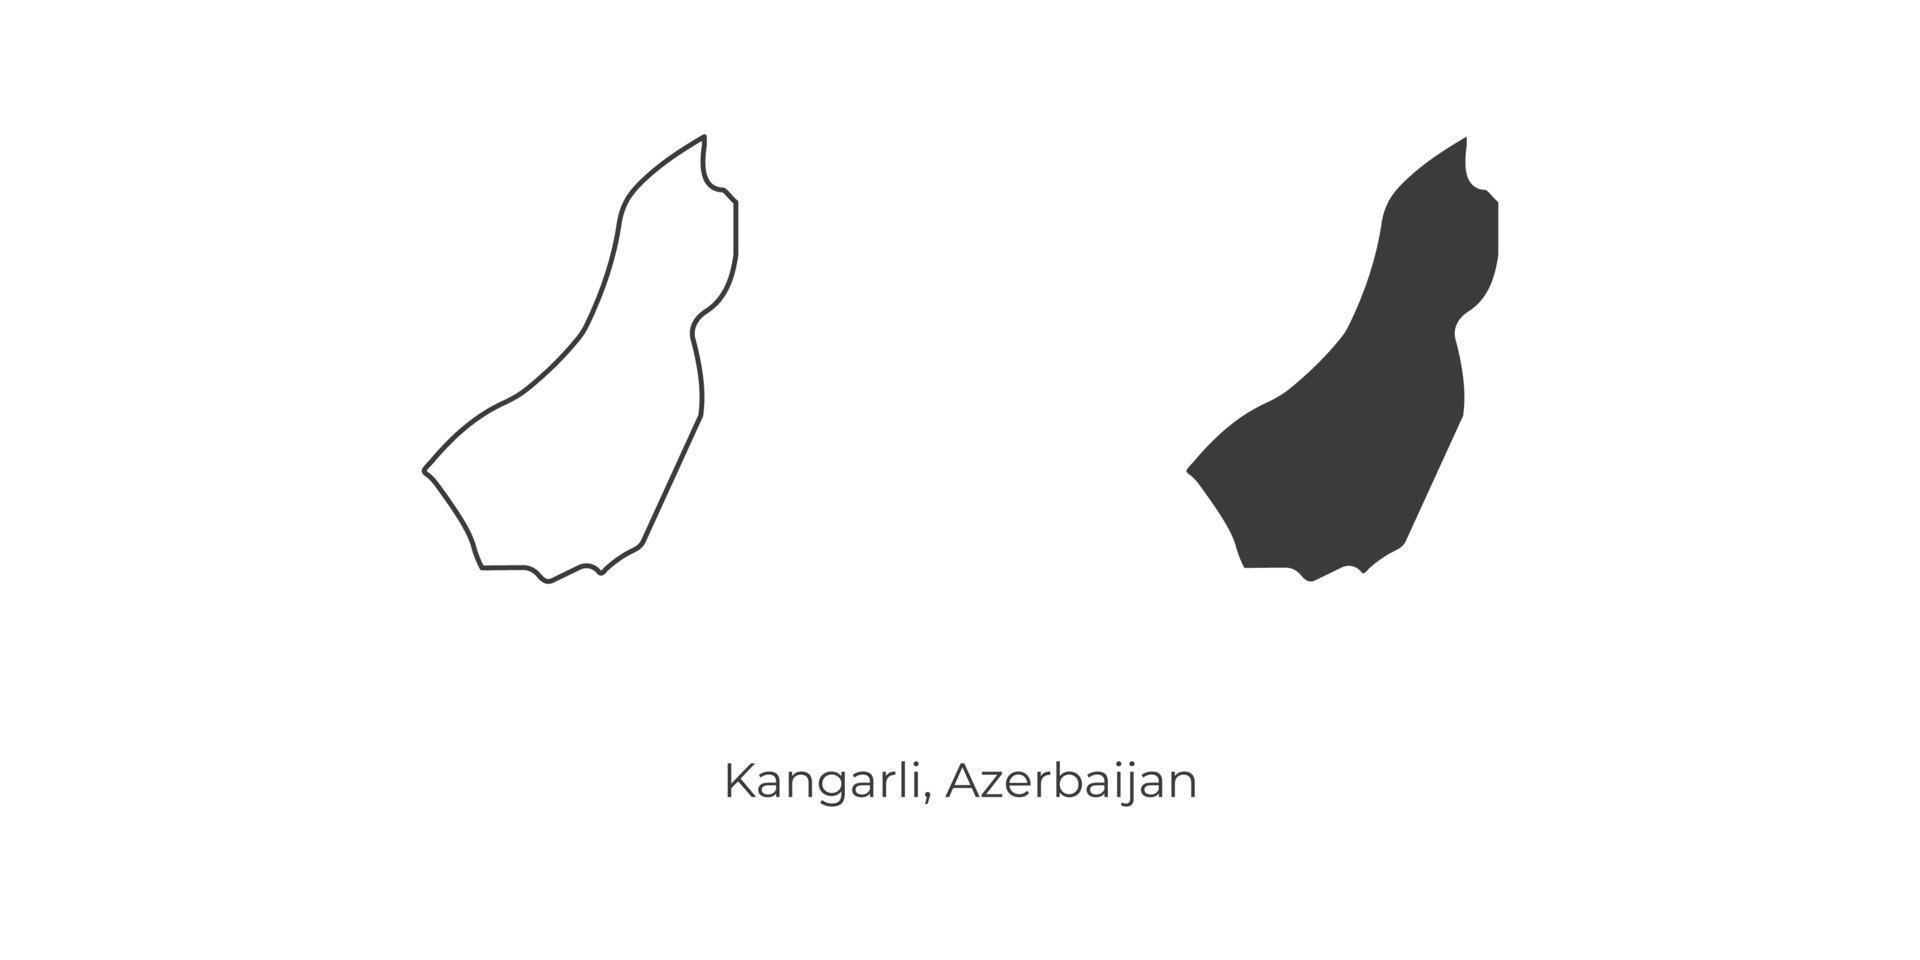 Simple vector illustration of Kangarli map, Azerbaijan.